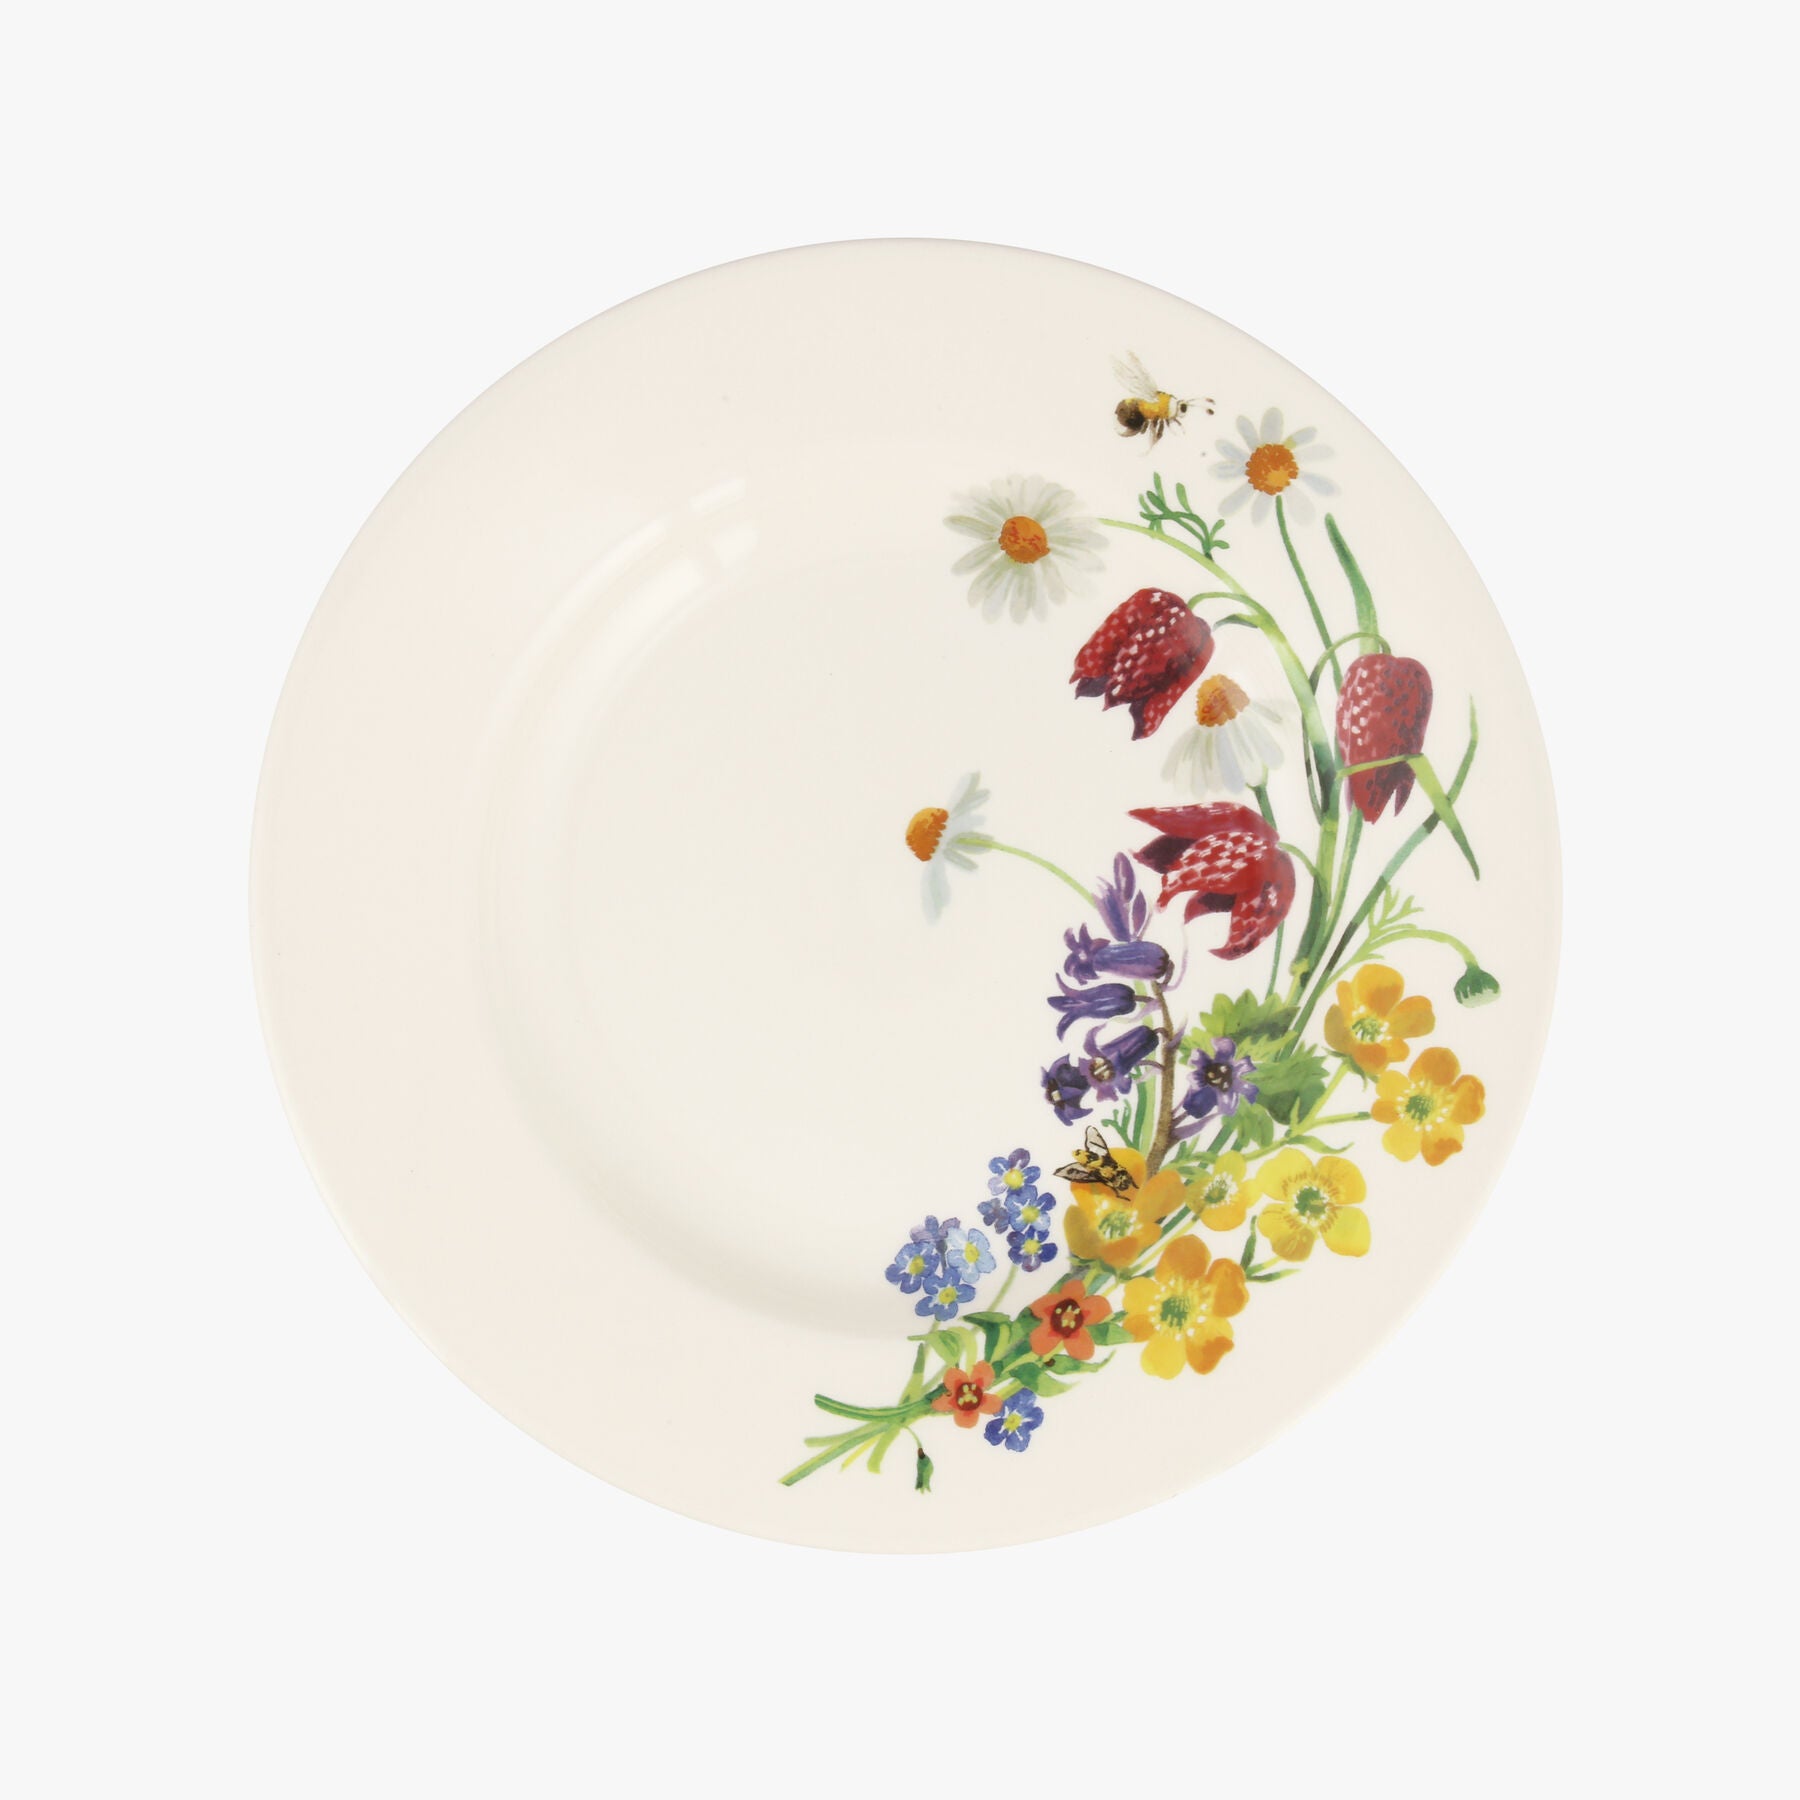 Emma Bridgewater 22cm Wild Flowers Printed Plate